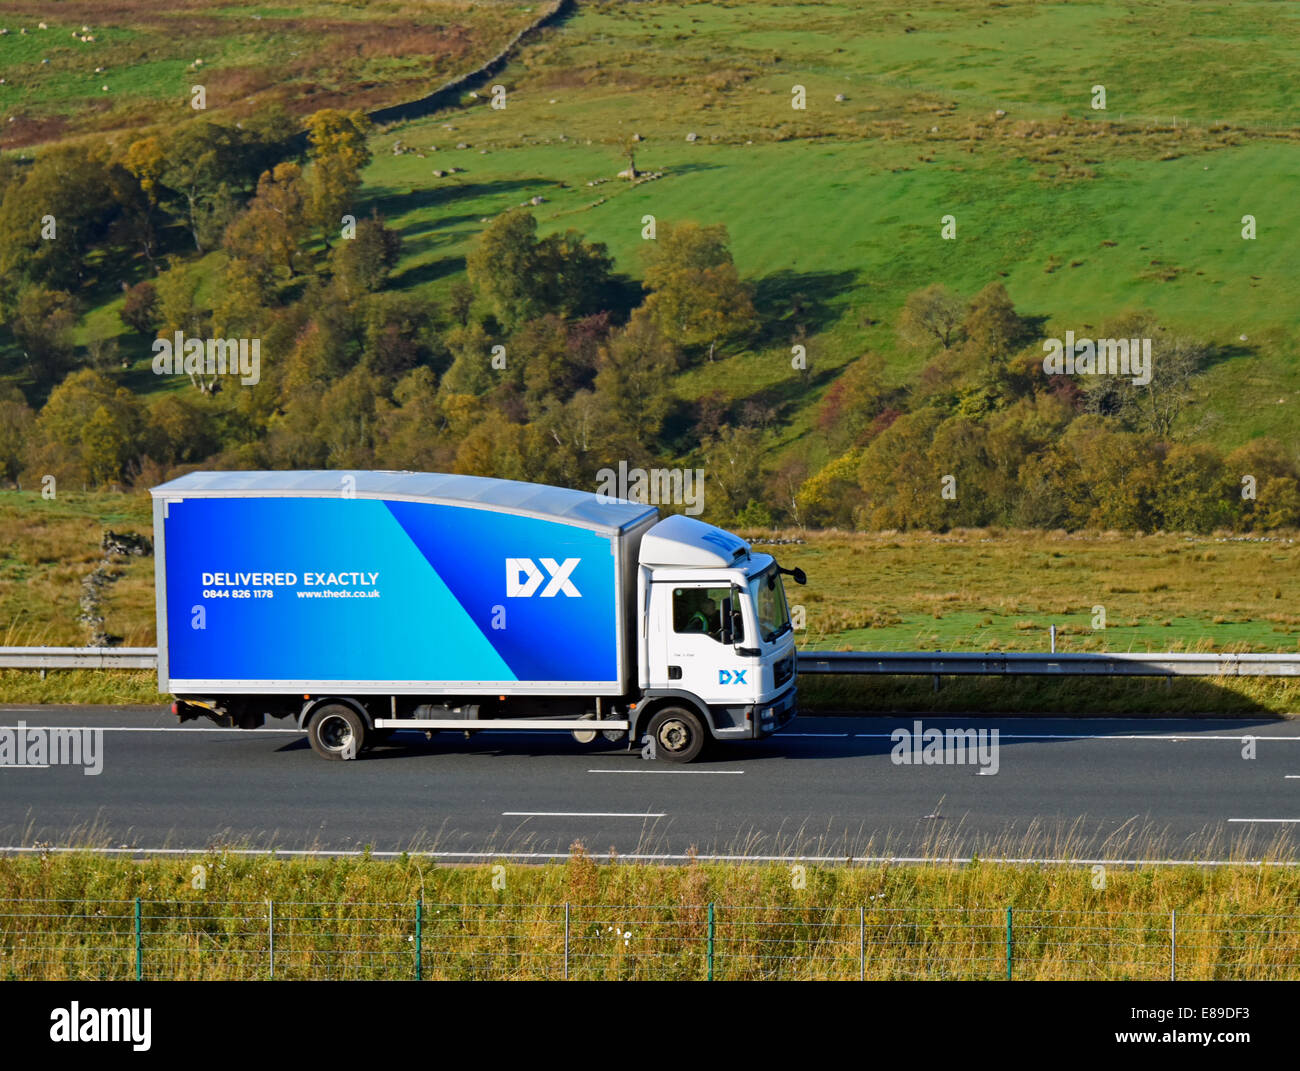 DX Delivered Exactly van. M6 Motorway, northbound. Shap, Cumbria, England, United Kingdom, Europe. Stock Photo